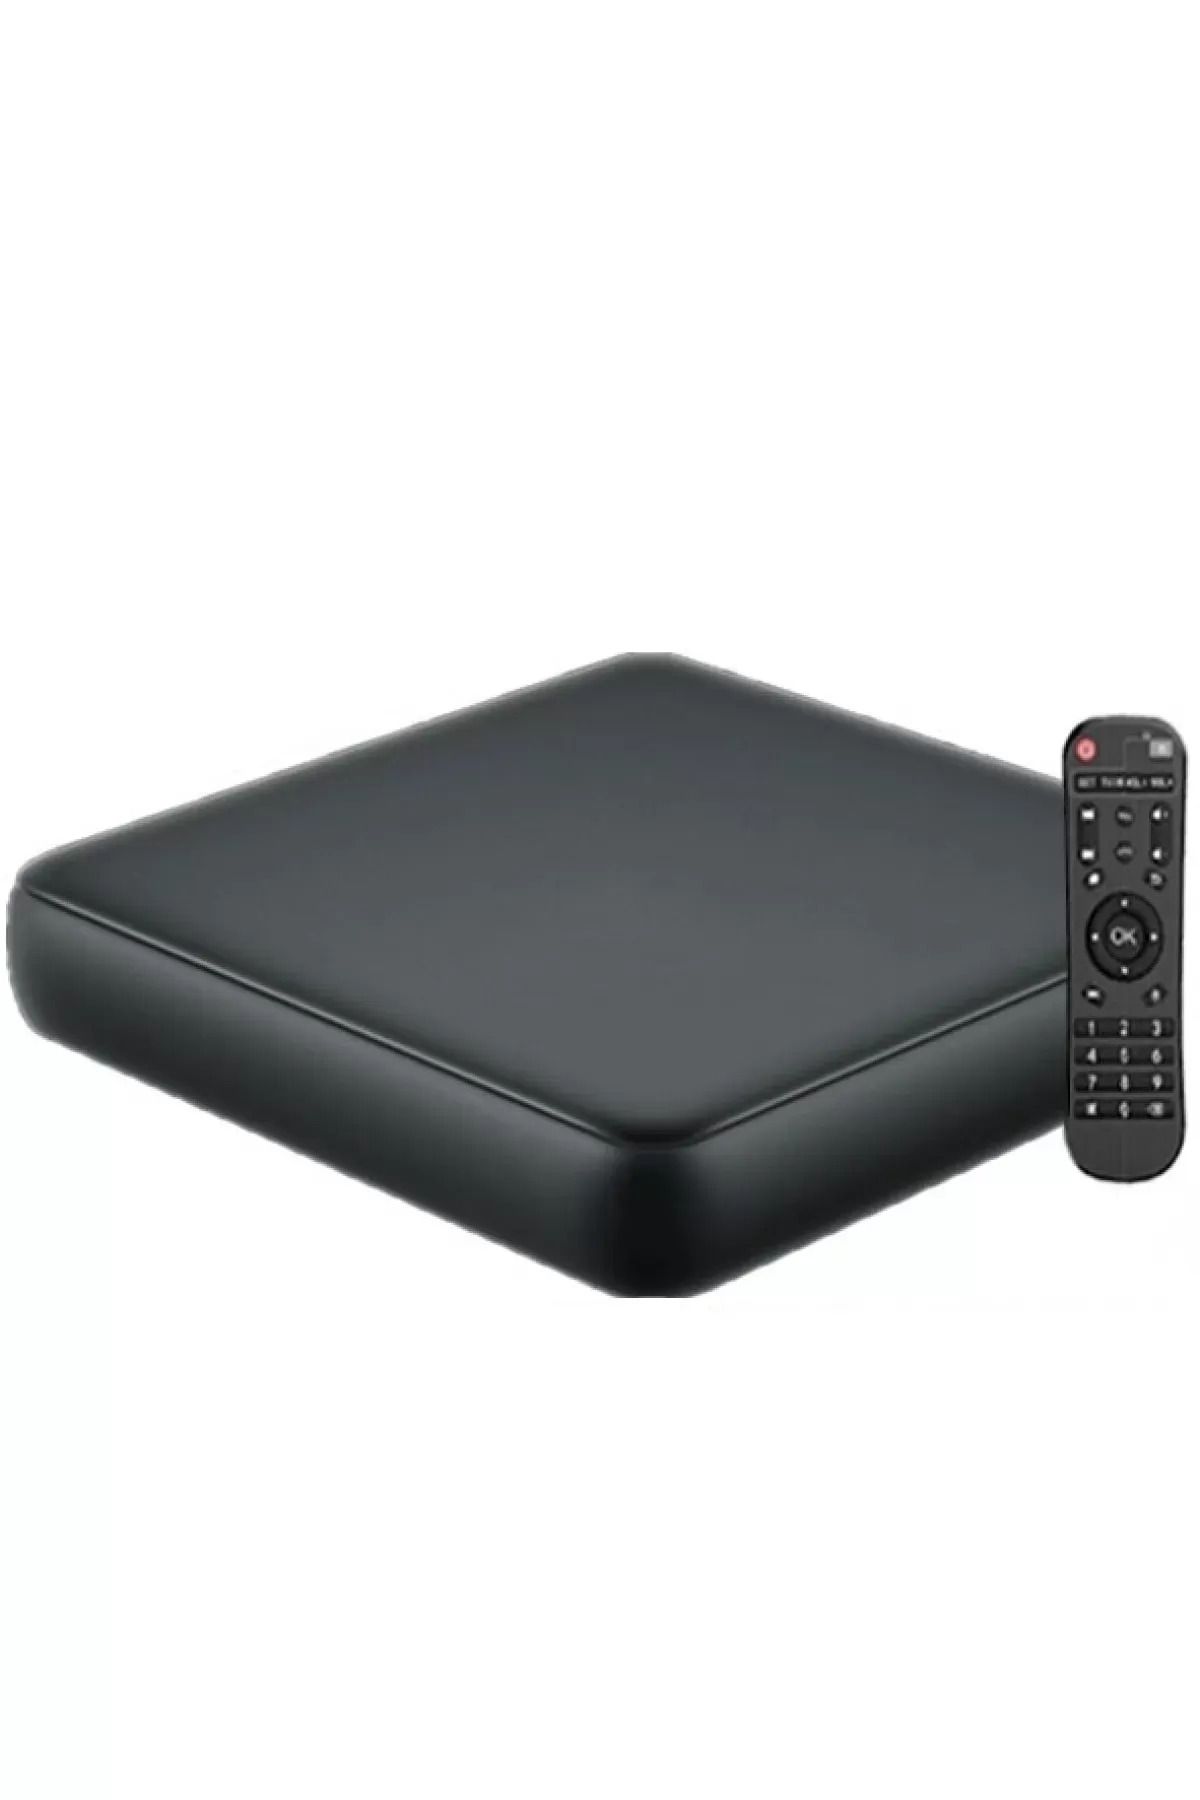 Life Teknoloji Airtech 4k Plus 2gb/16gb Mediabox 4k Ultra Hd Android 9 Tv Box Mybox Netflix Youtube